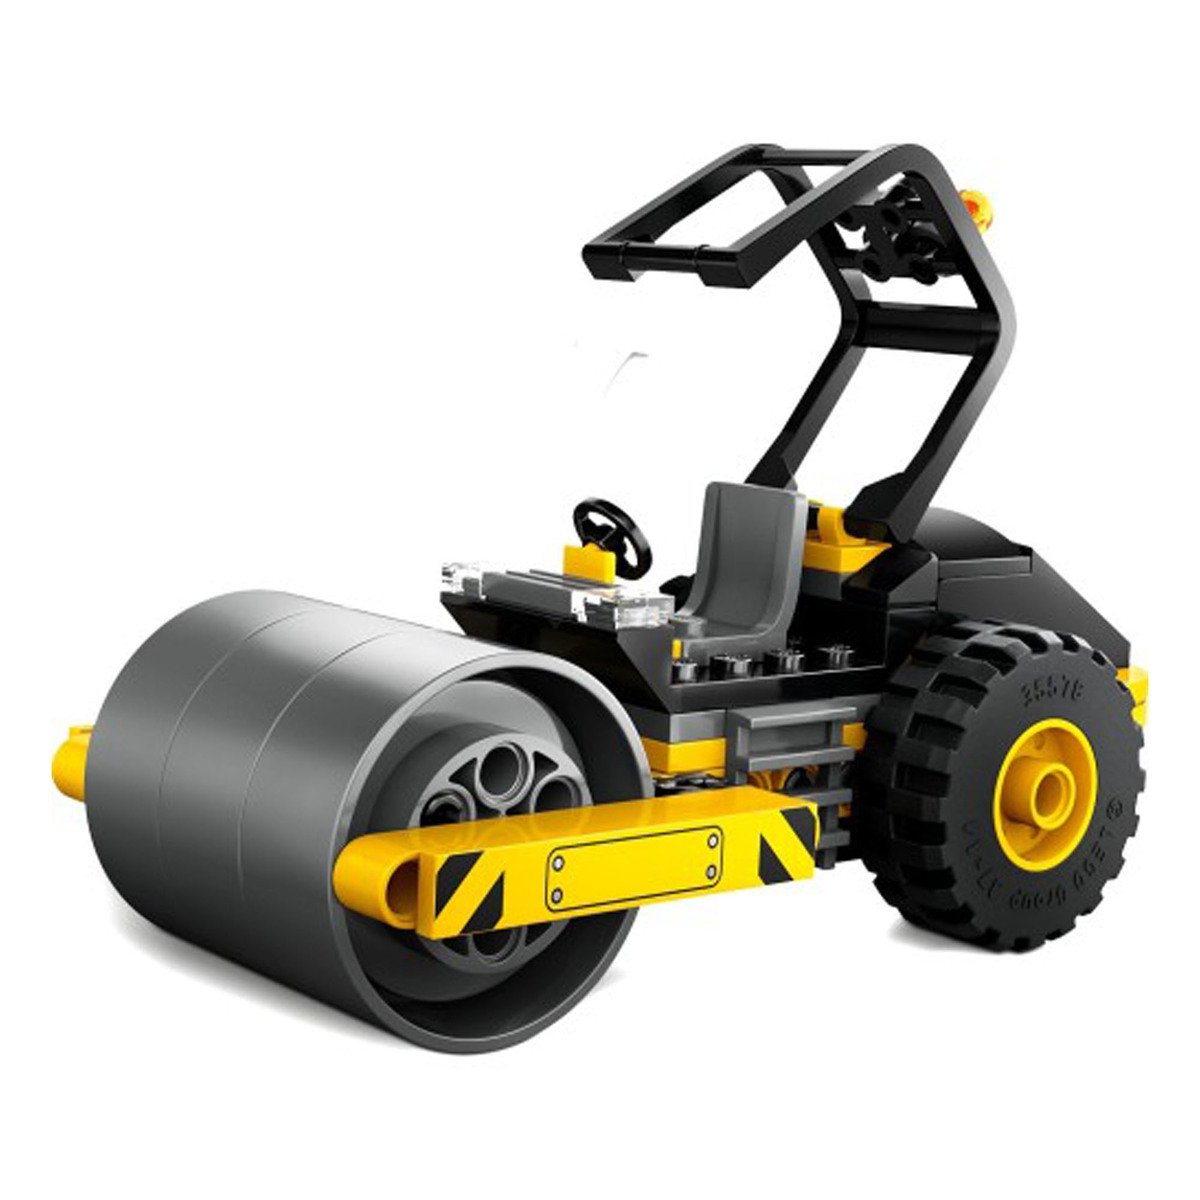 Lego Construction Steamroller, 4 pcs, 60401